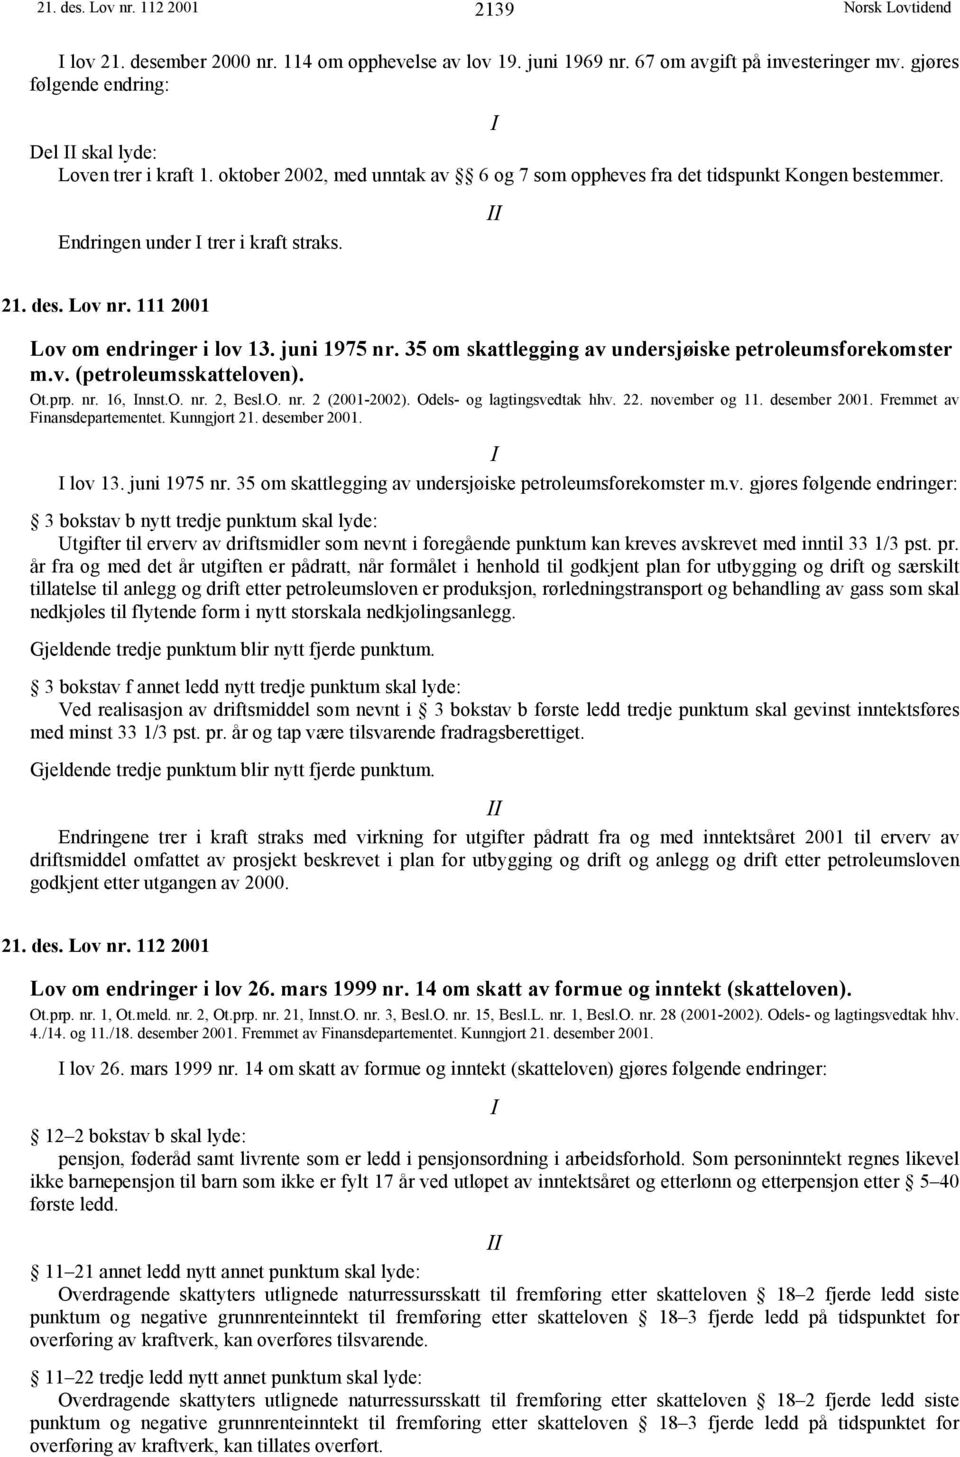 des. Lov nr. 111 2001 Lov om endringer i lov 13. juni 1975 nr. 35 om skattlegging av undersjøiske petroleumsforekomster m.v. (petroleumsskatteloven). Ot.prp. nr. 16, Innst.O. nr. 2, Besl.O. nr. 2 (2001-2002).